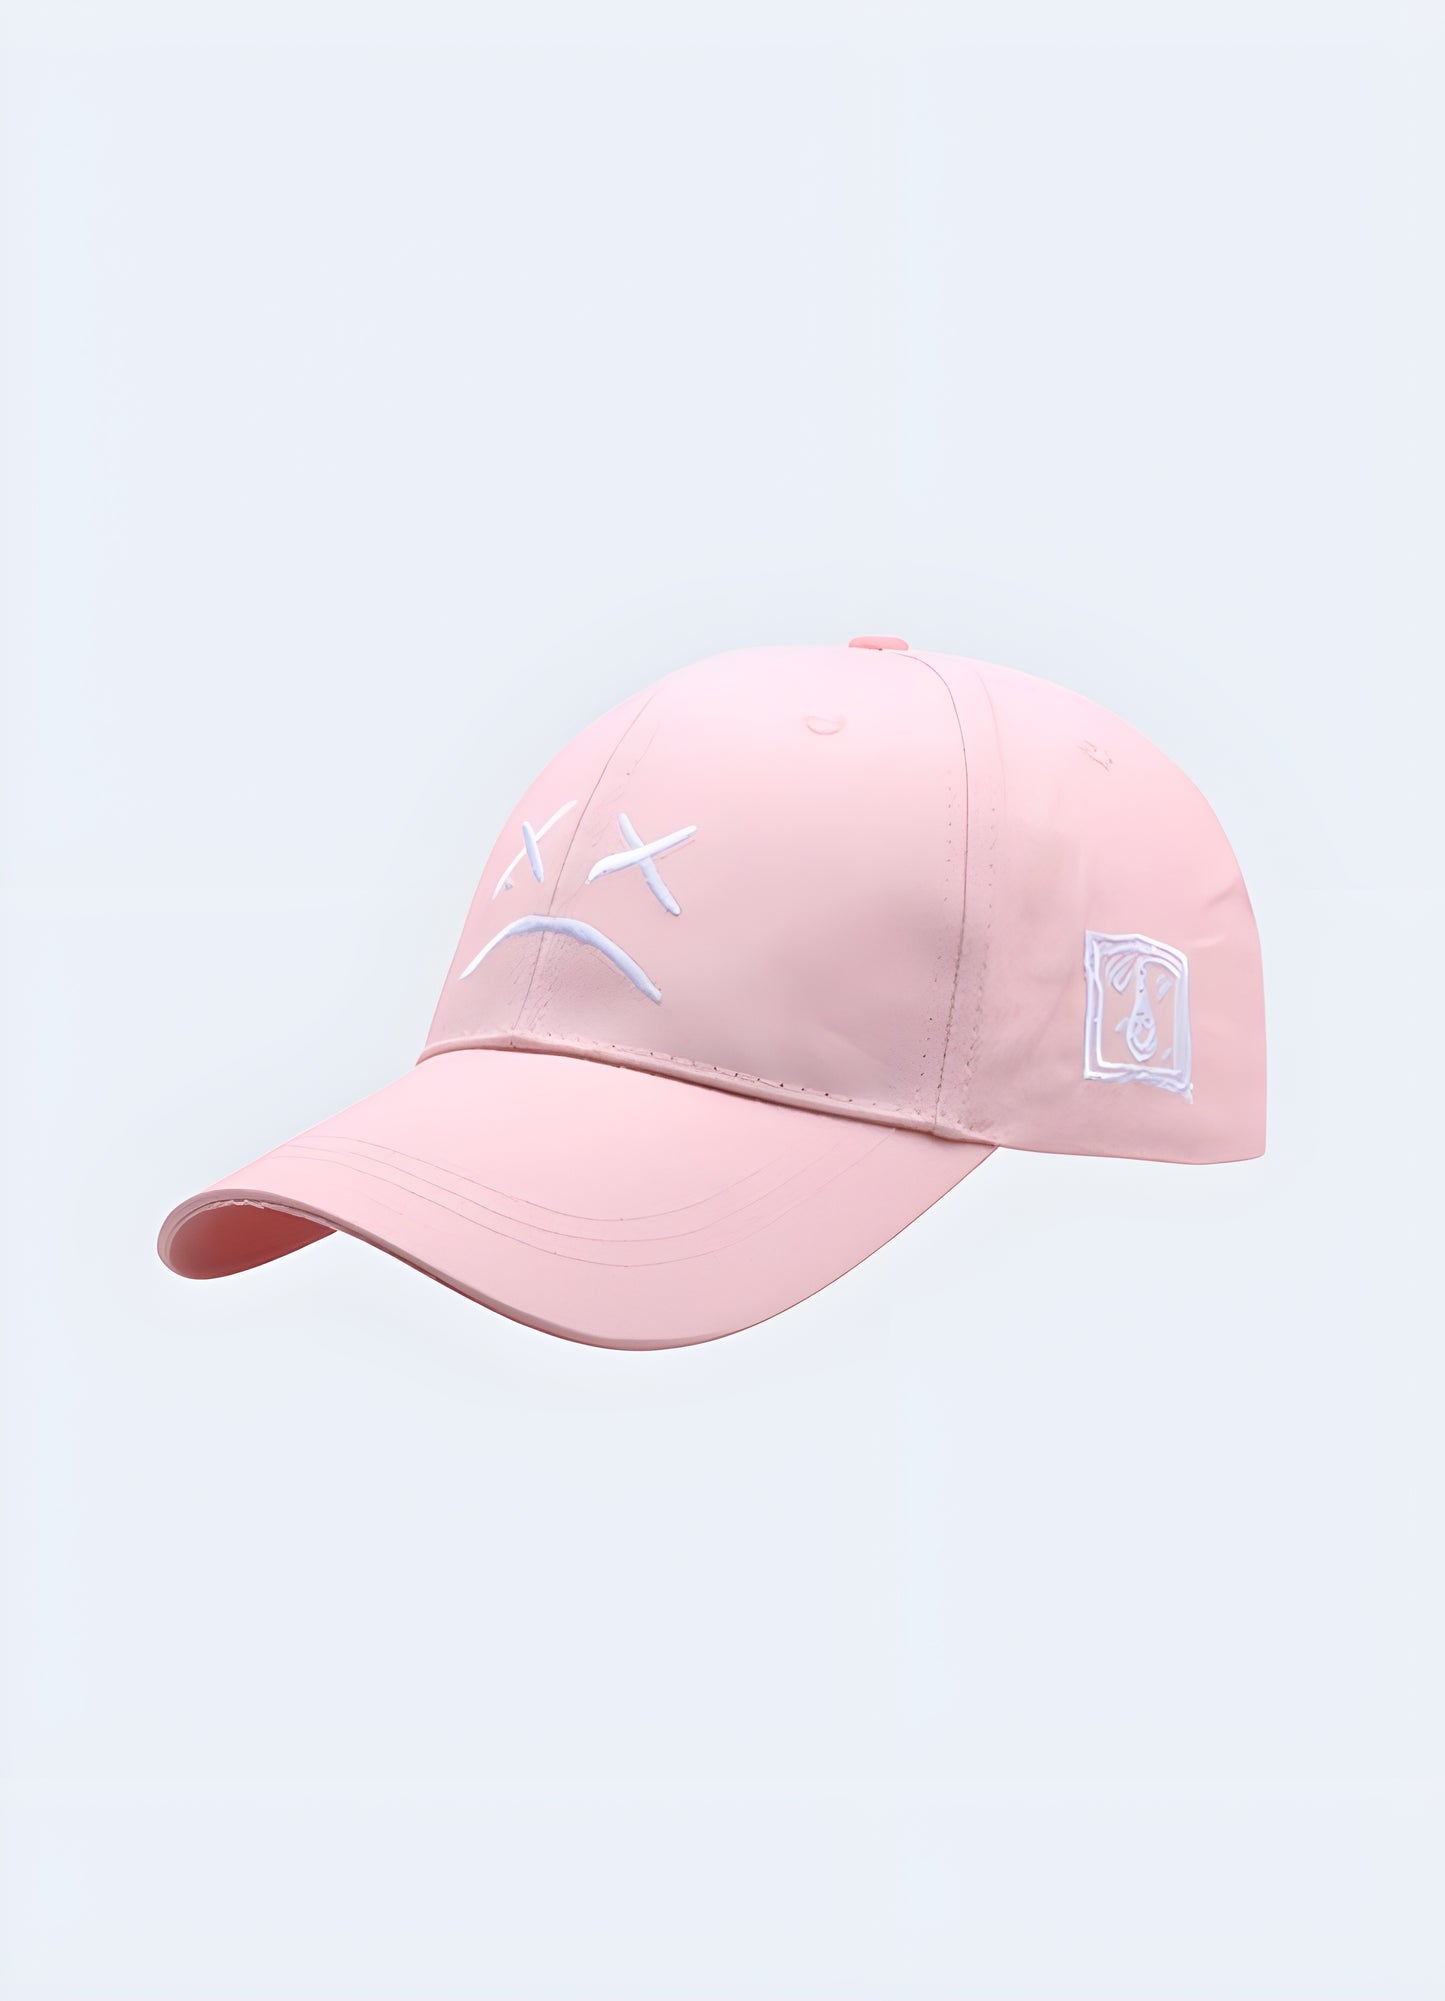 Lil peep cap pink unisex streetwear style.